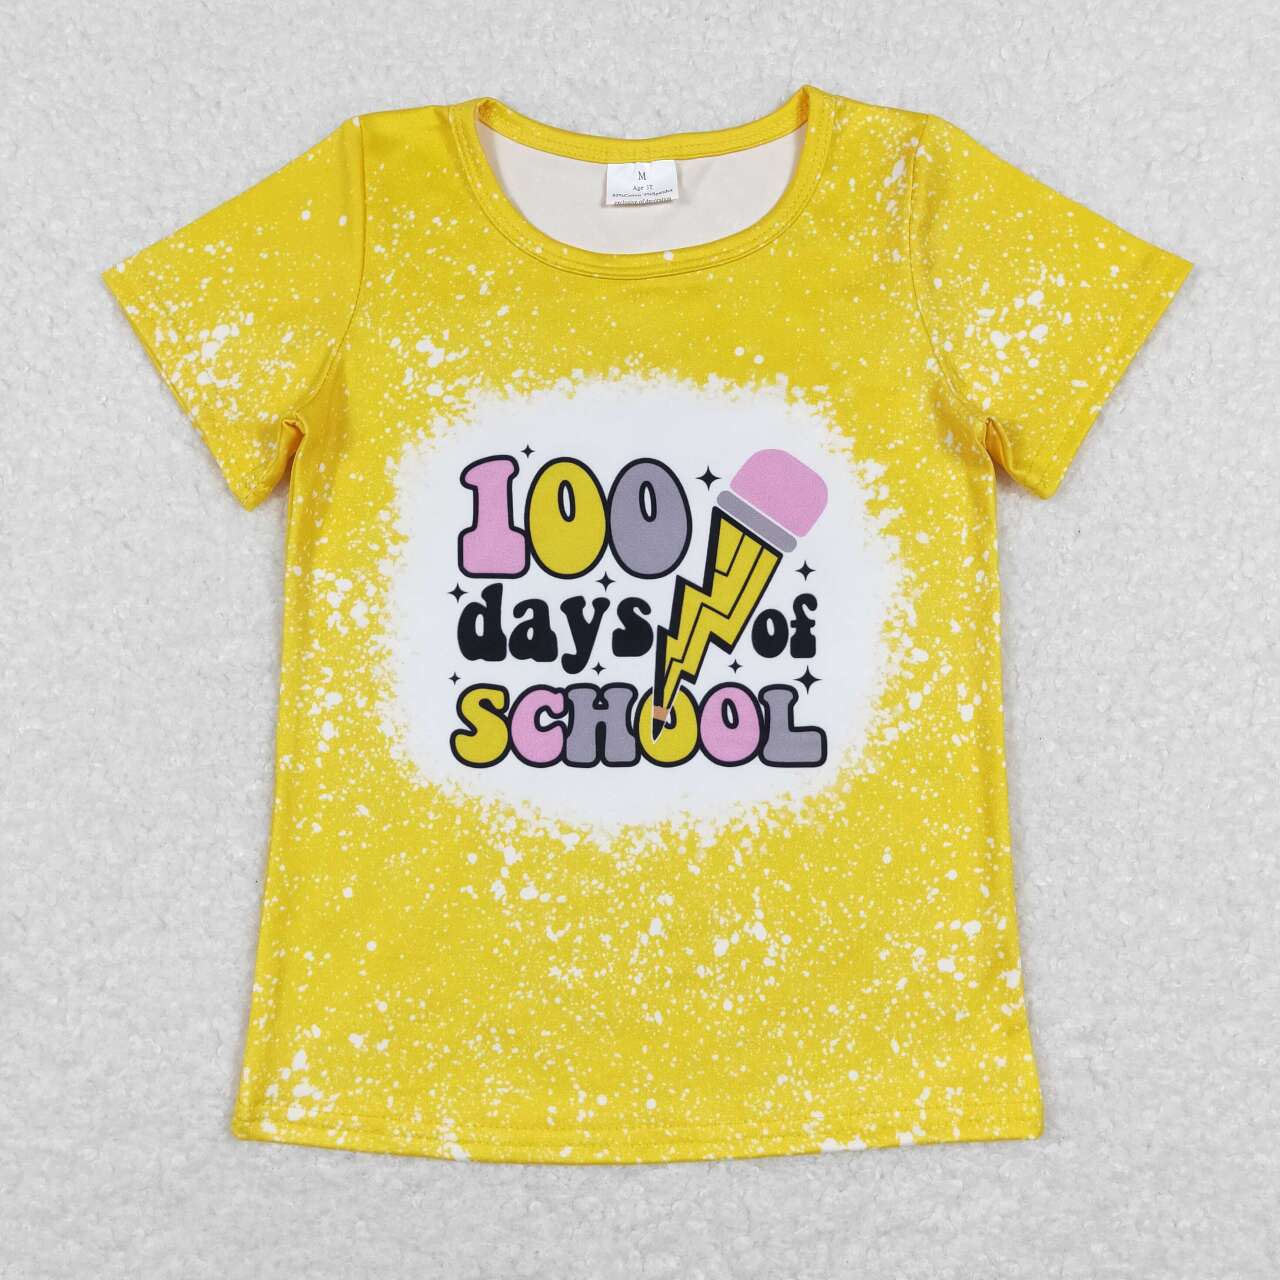 GSSO0524 Pencil 100 Days Of School Yellow Top Denim Shorts Summer Girls Clothes Set